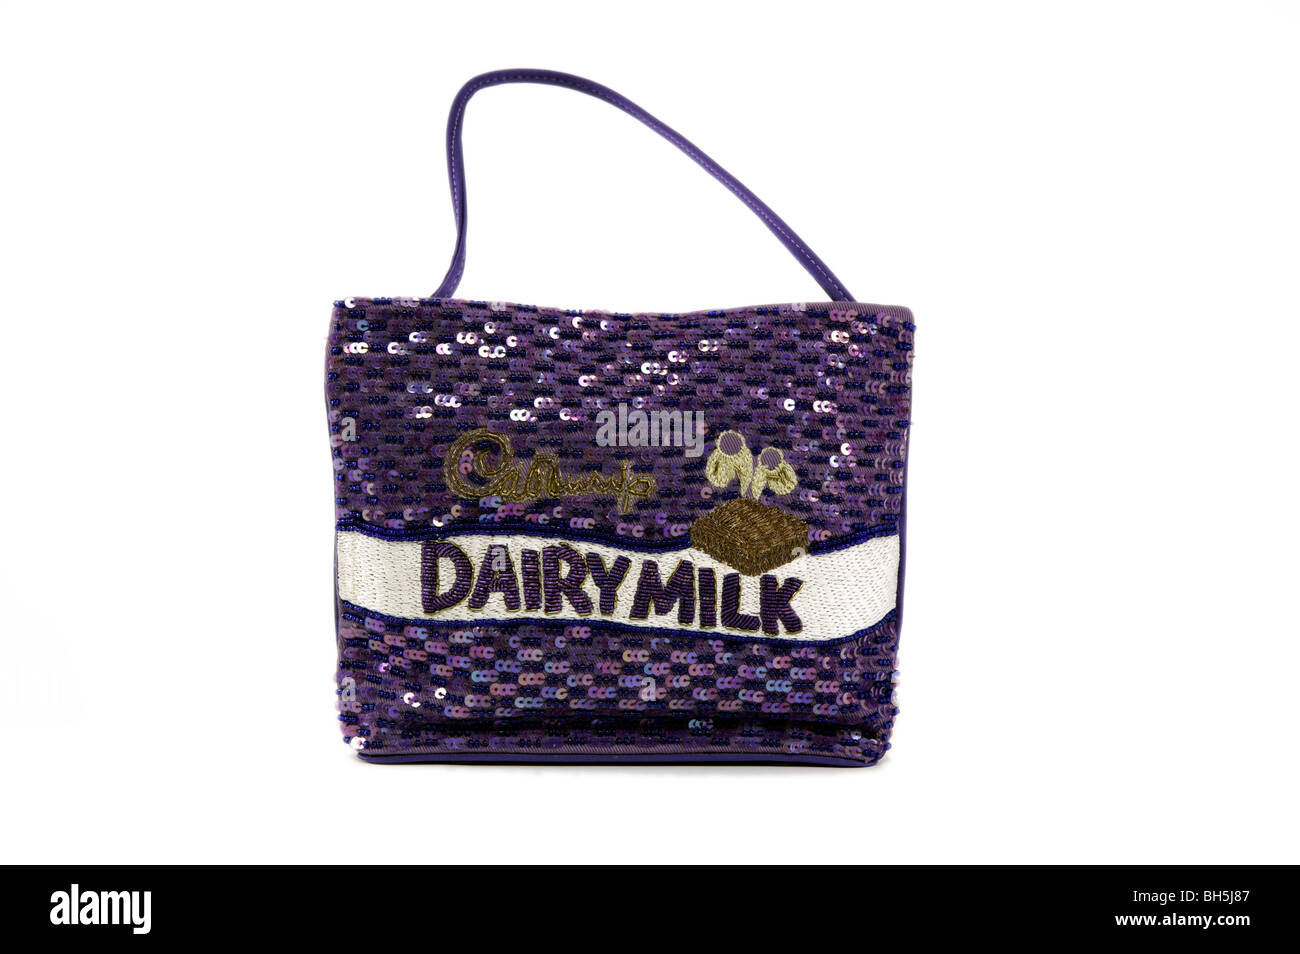 Anya Hindmarch handbag with a Cadburys dairy milk design Stock Photo